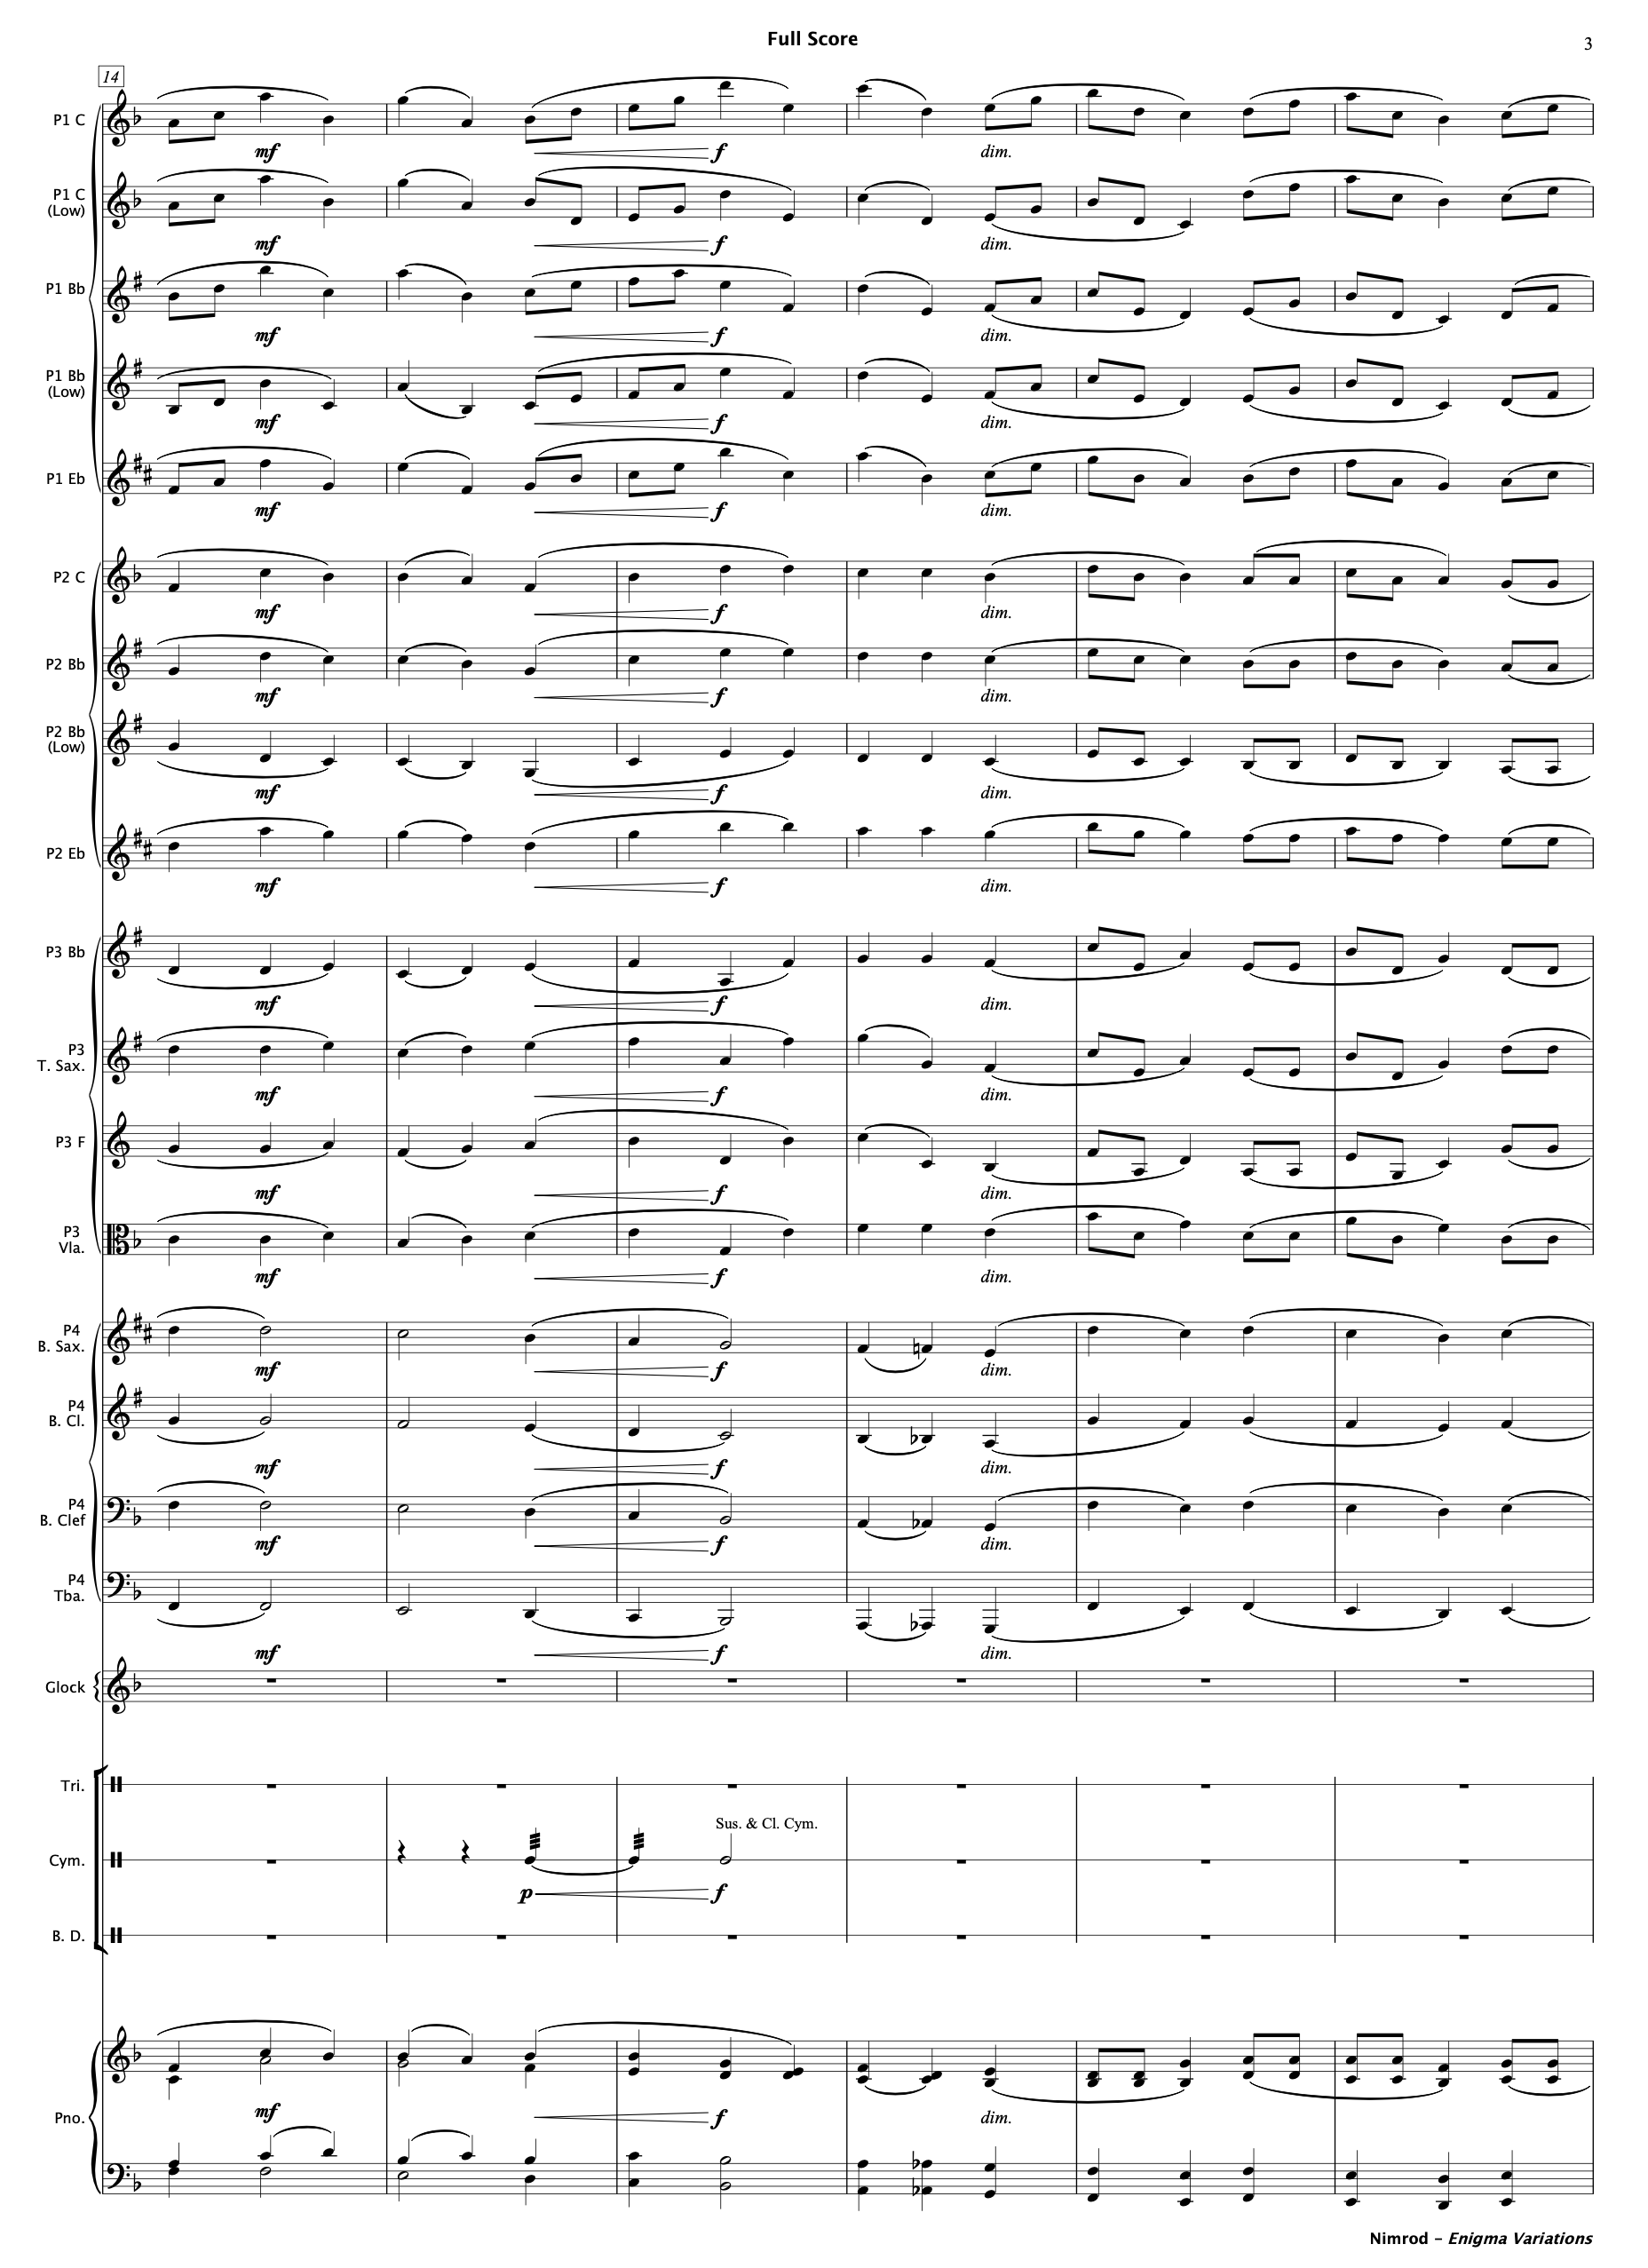 Nimrod (Enigma Variations) - Paul Barker Music 